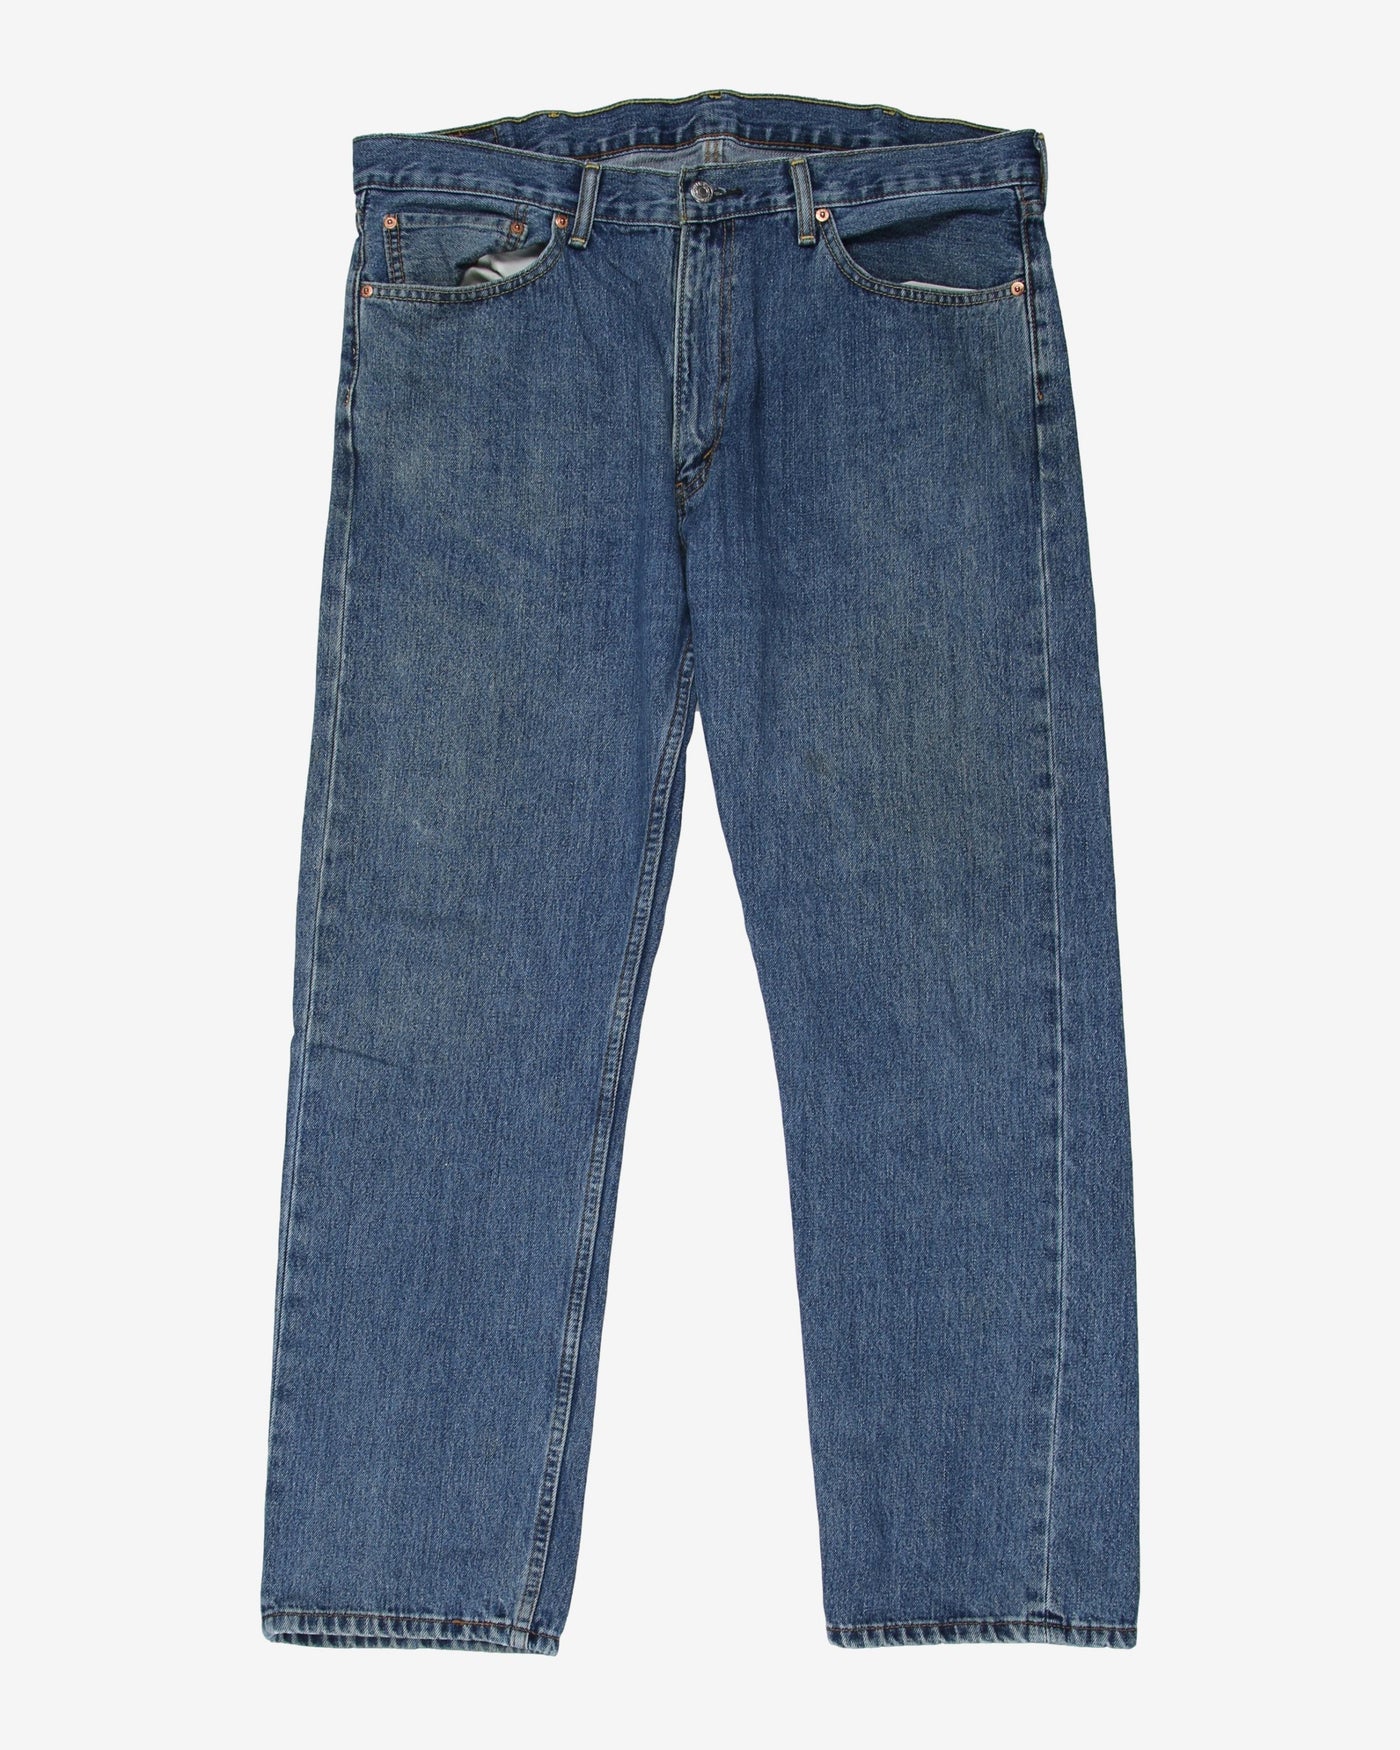 Levi's 505 Dark Blue Washed Casual Denim Jeans - W39 L30